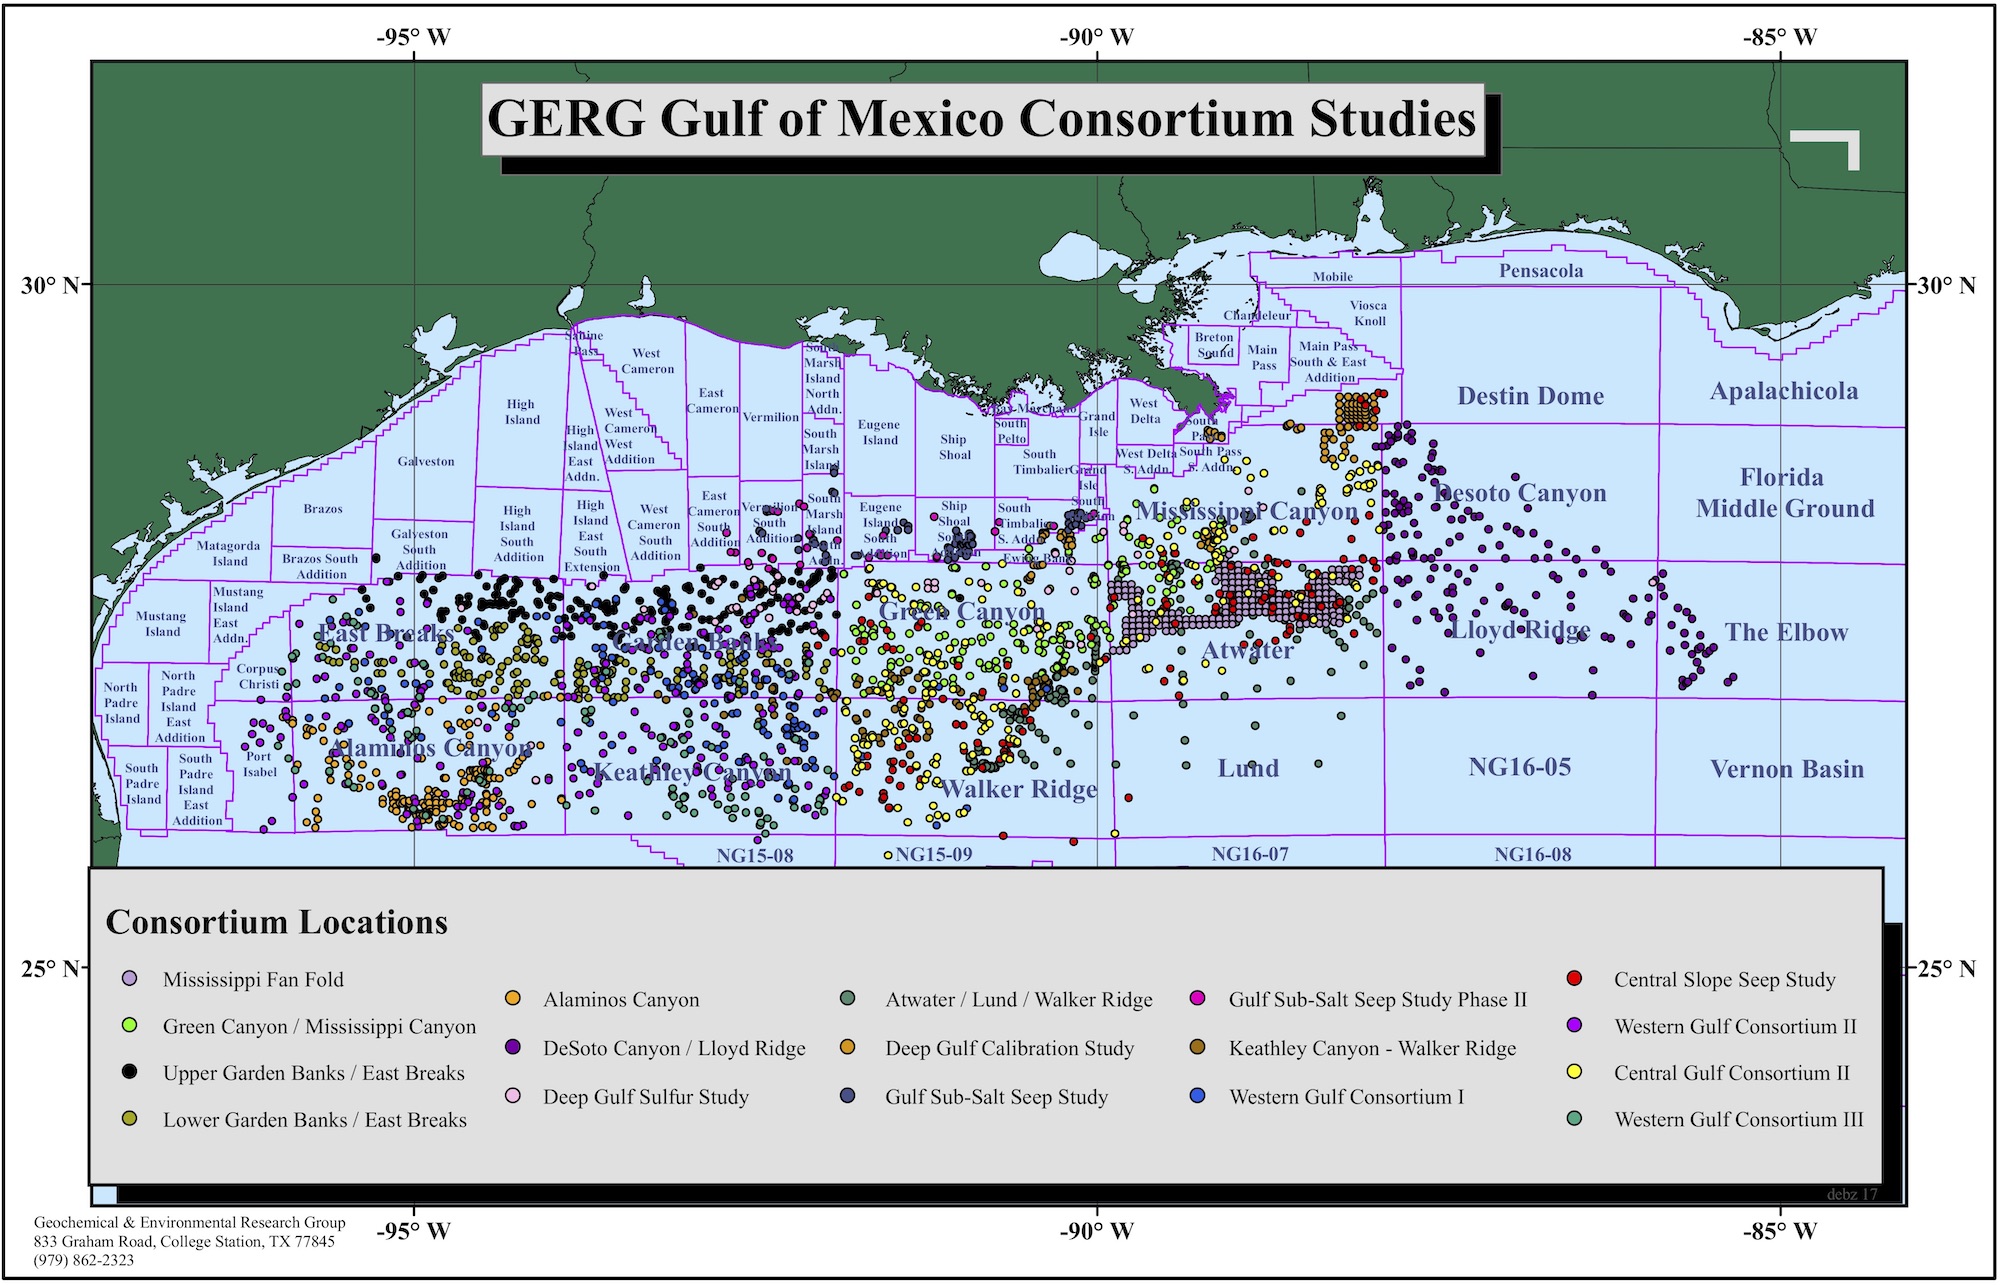 Gulf of Mexico Consortium Study Locations